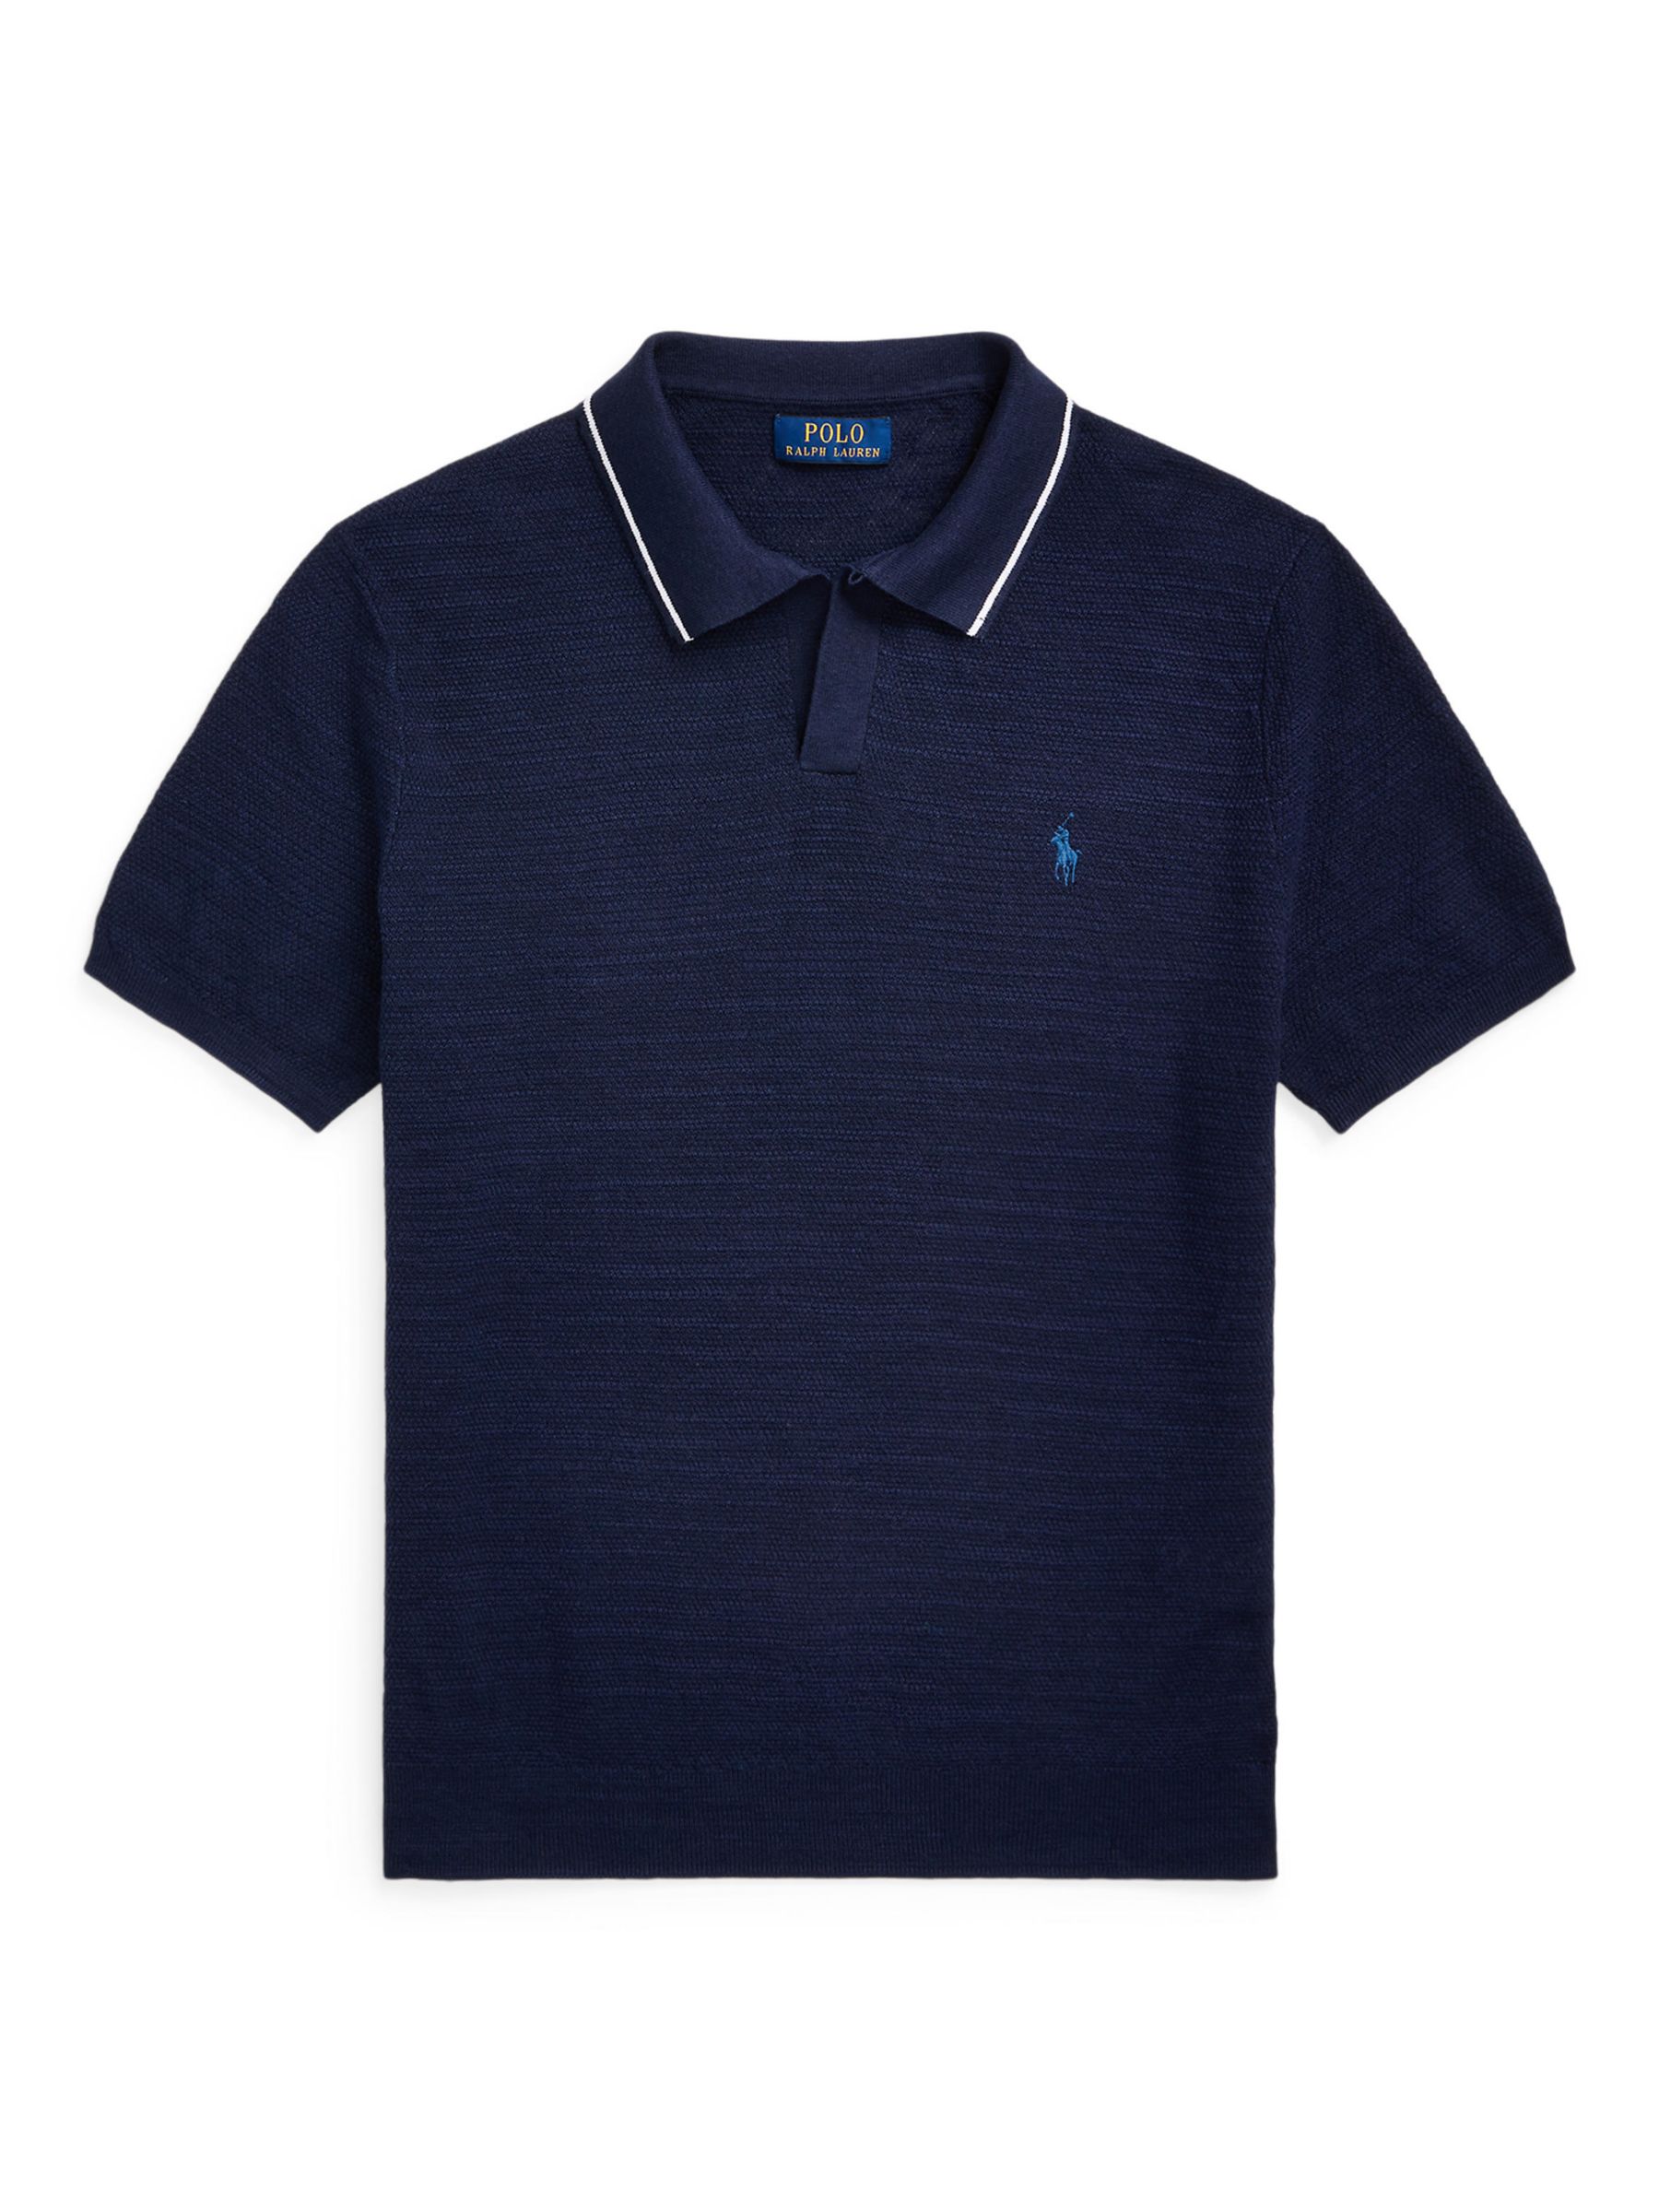 Buy Polo Ralph Lauren Linen Blend Polo Shirt, Bright Navy Online at johnlewis.com